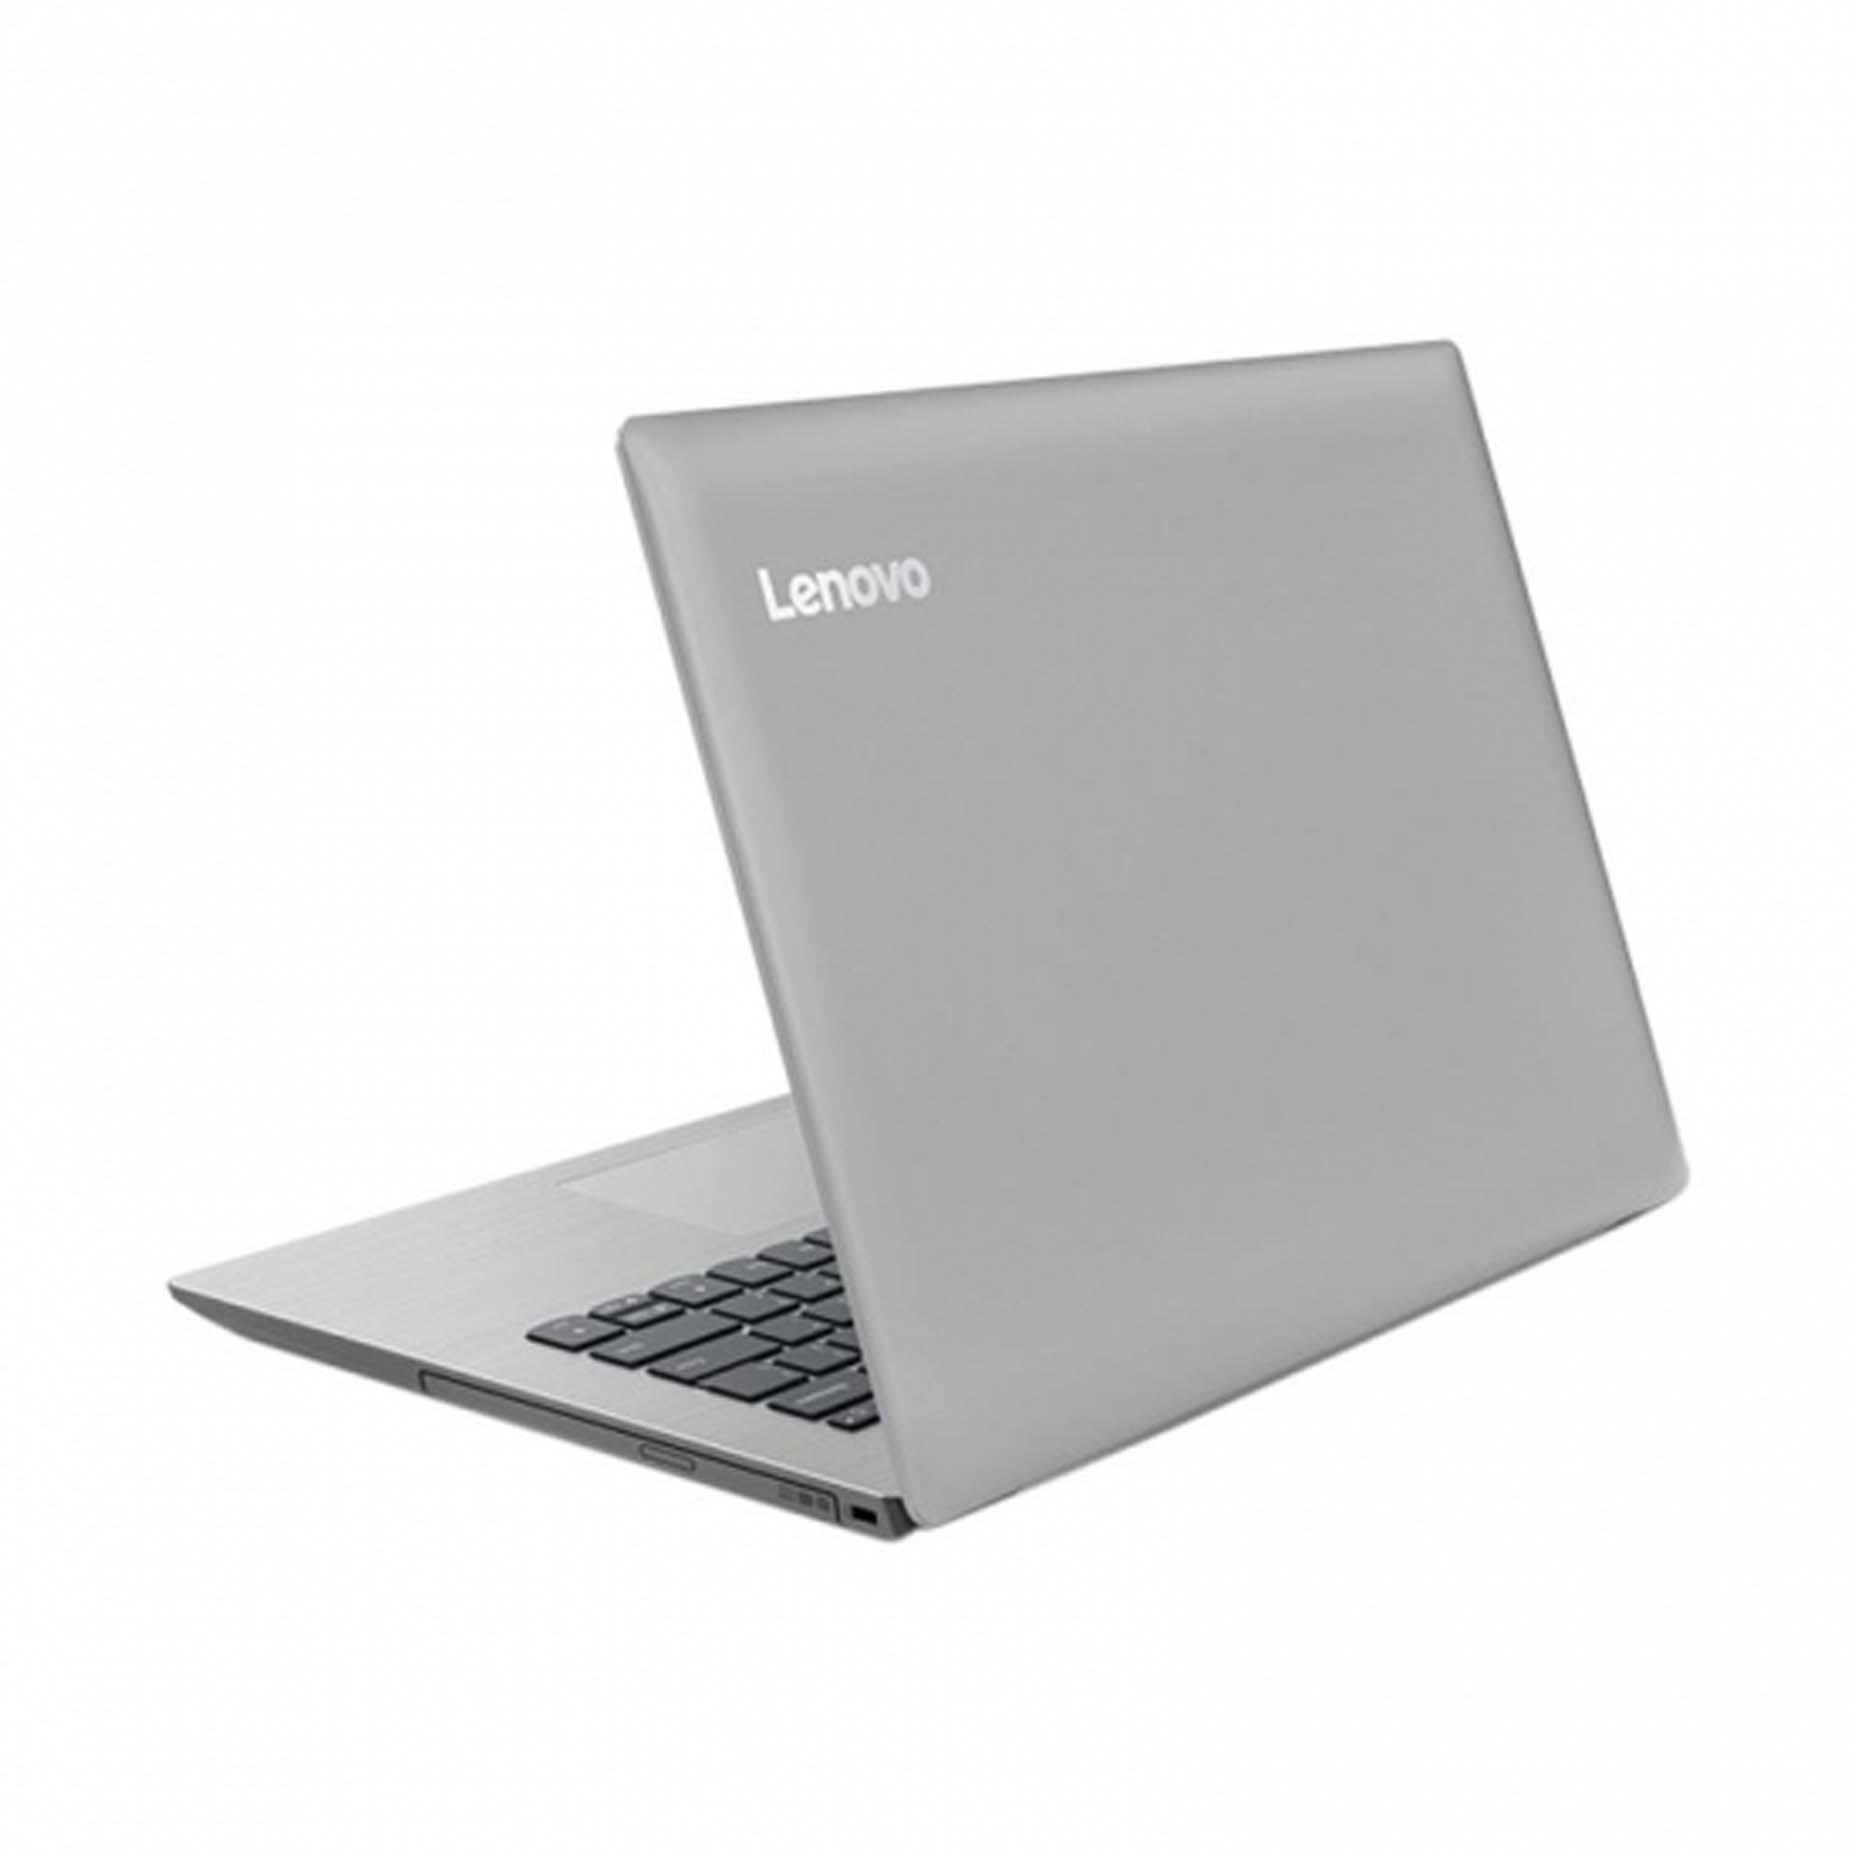 Harga Lenovo Ideapad IP330-14IGM 1RID Laptop Celeron N4000 4GB 500GB Integrated 14 Inch Windows 10 Grey